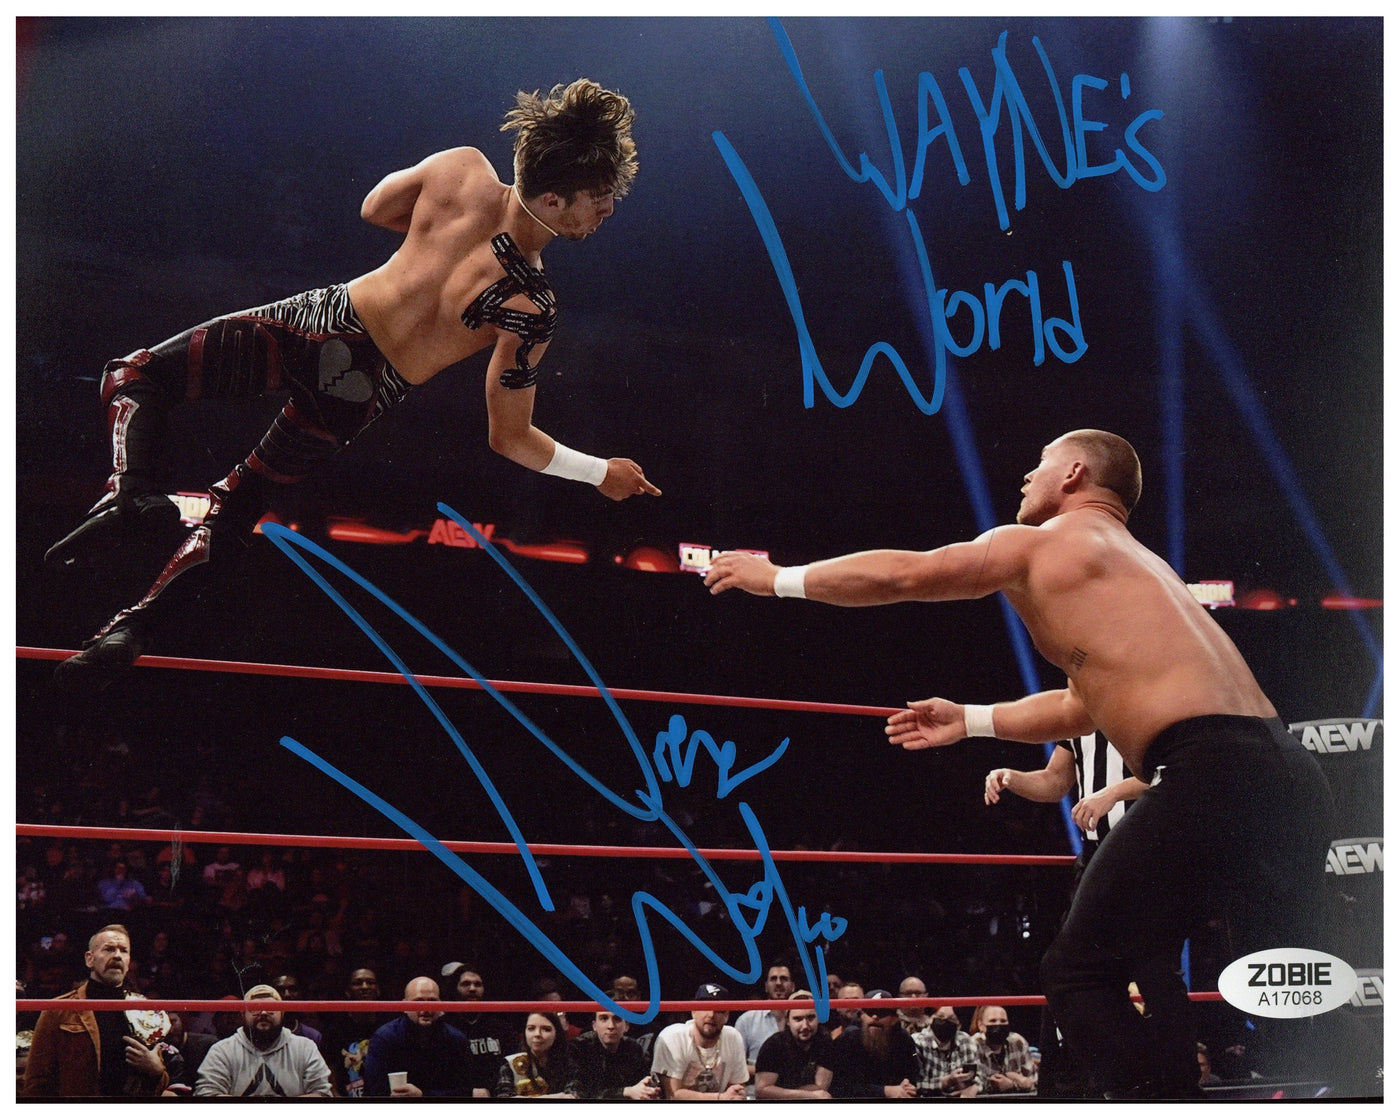 Nick Wayne Signed 8x10 Photo AEW Pro Wrestling Autographed Zobie COA